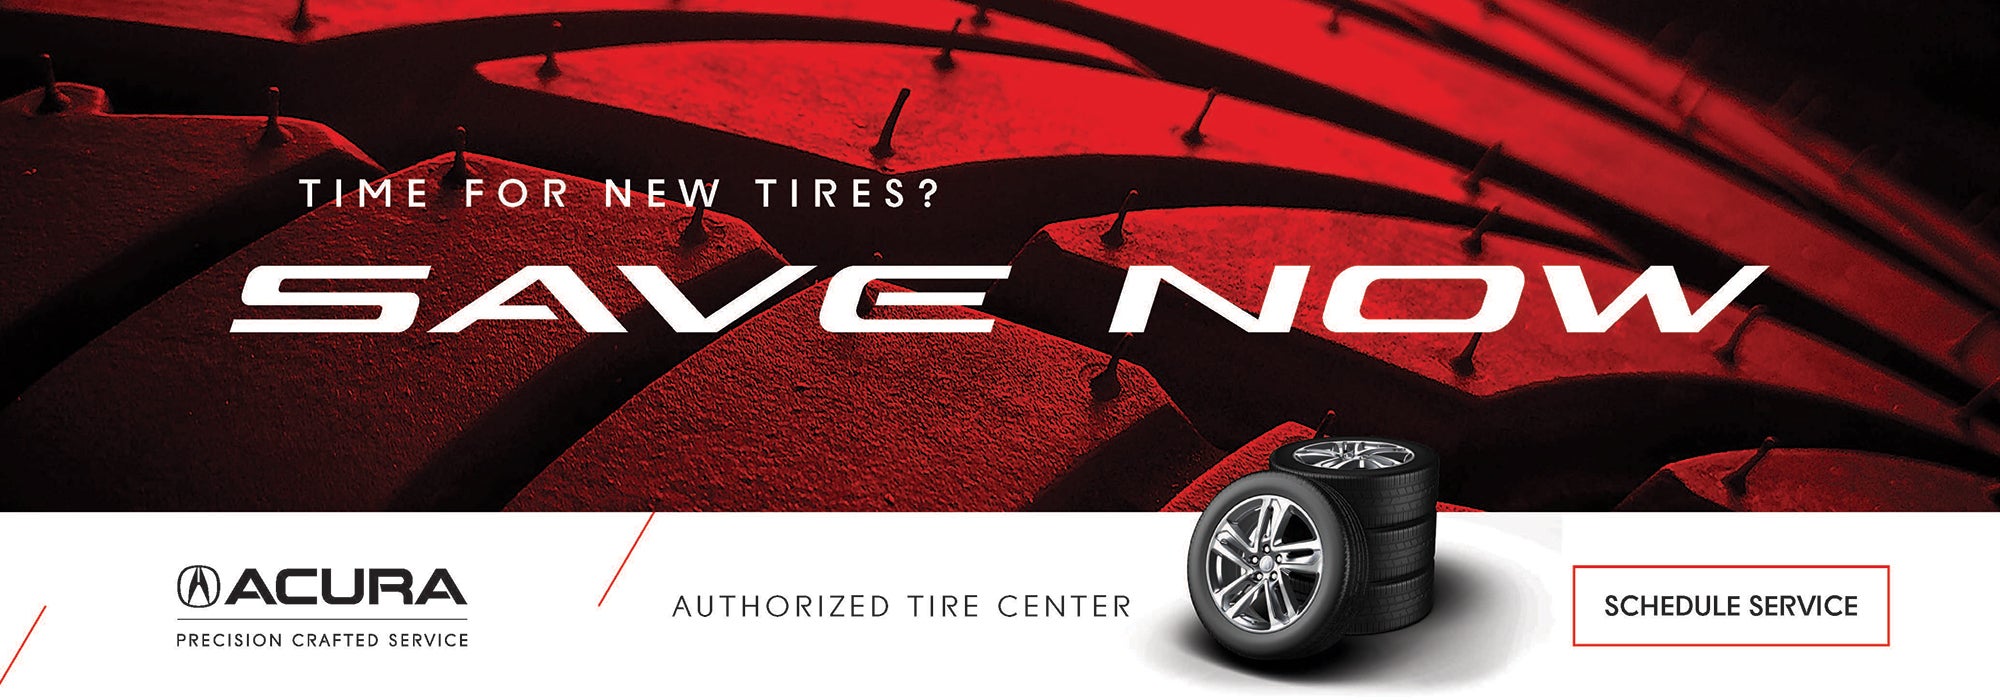 New Tires Savings